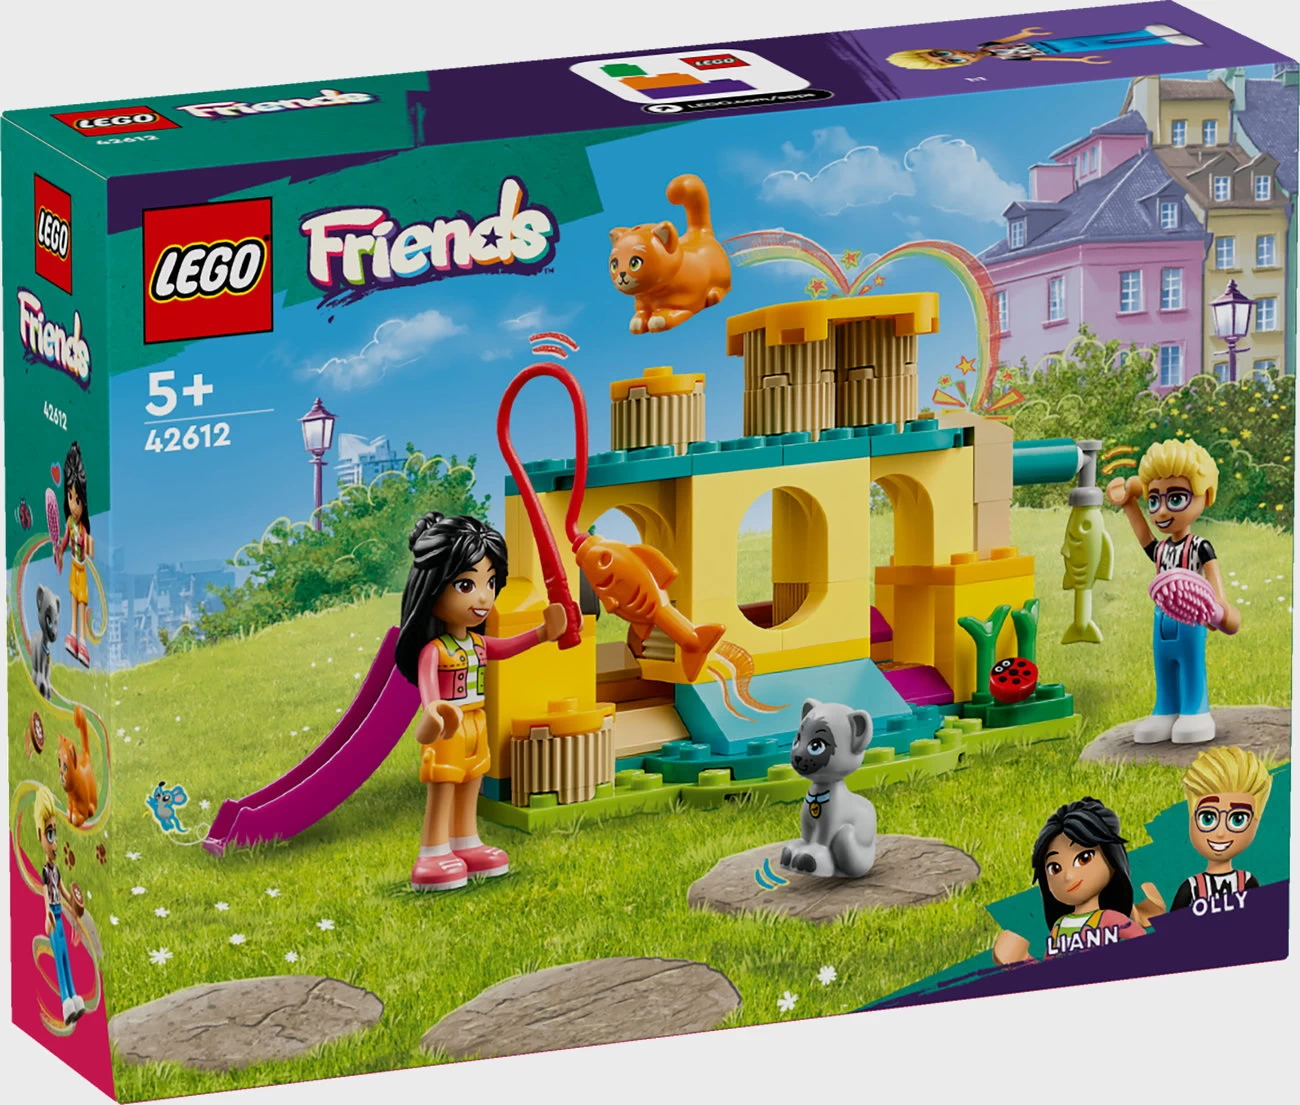 LEGO Friends 42612 - Abenteuer auf dem Katzenspielplatz 